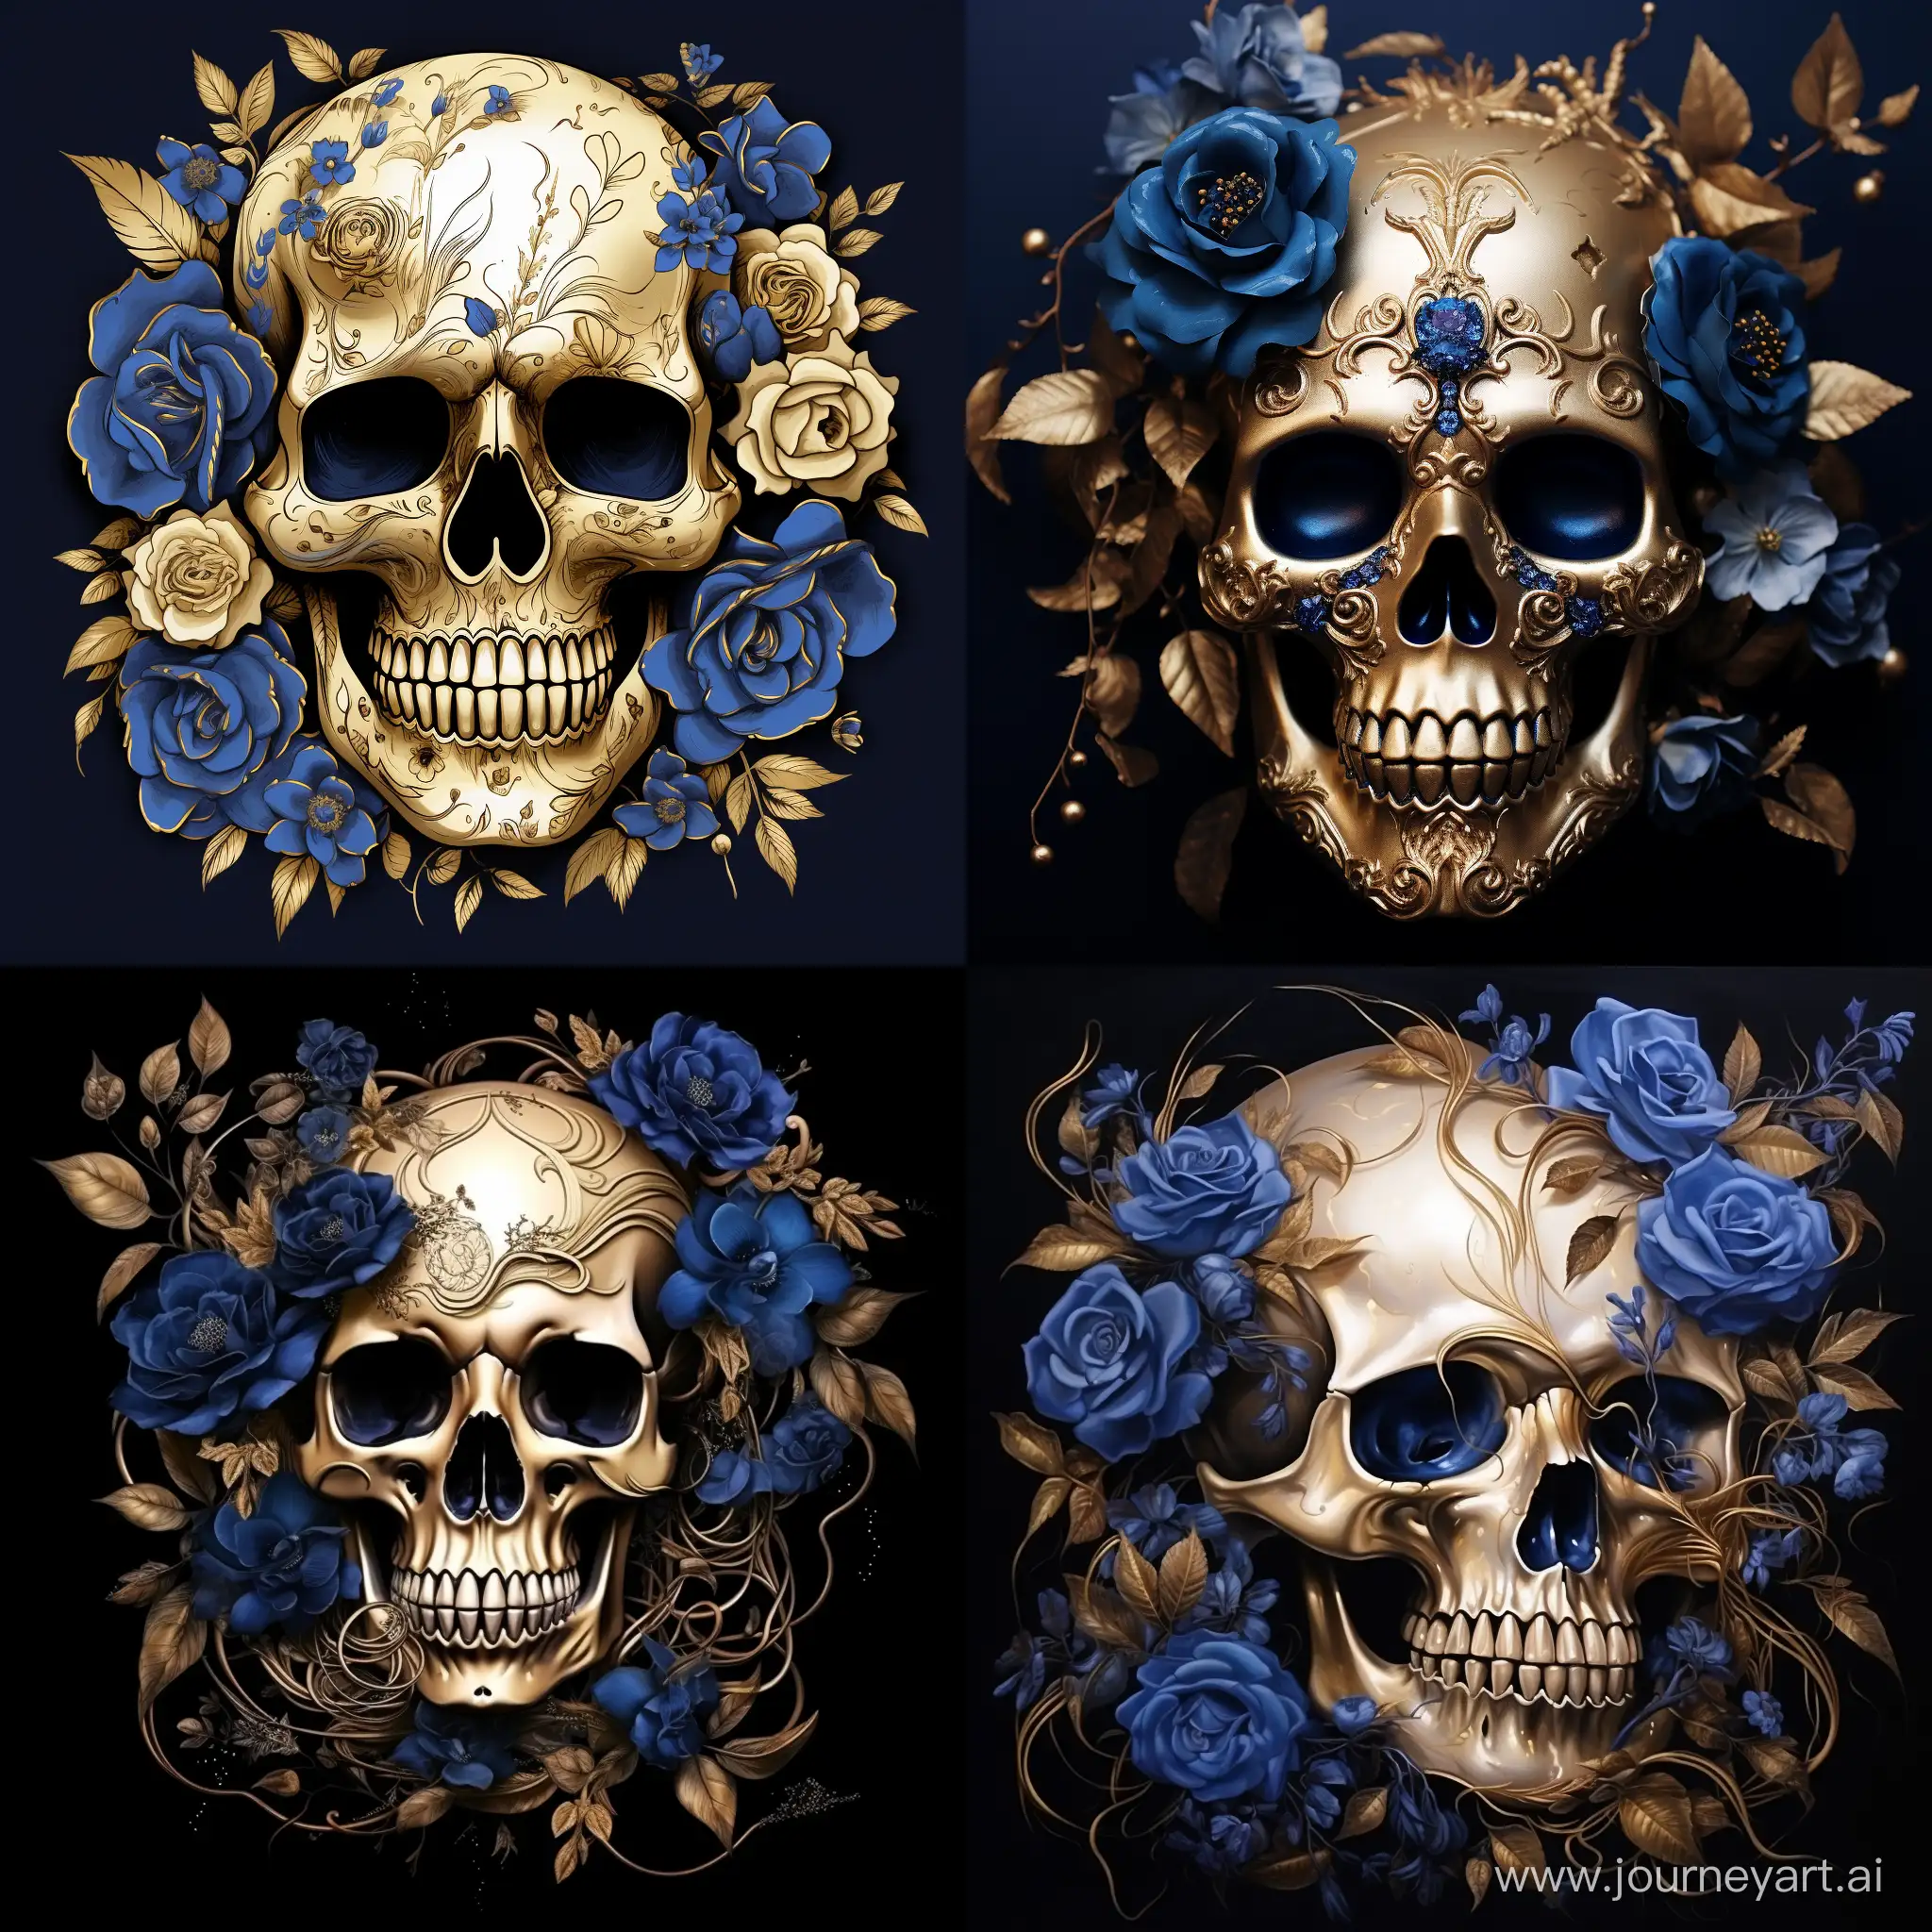 Enchanting-Golden-Skull-Surrounded-by-Blue-Roses